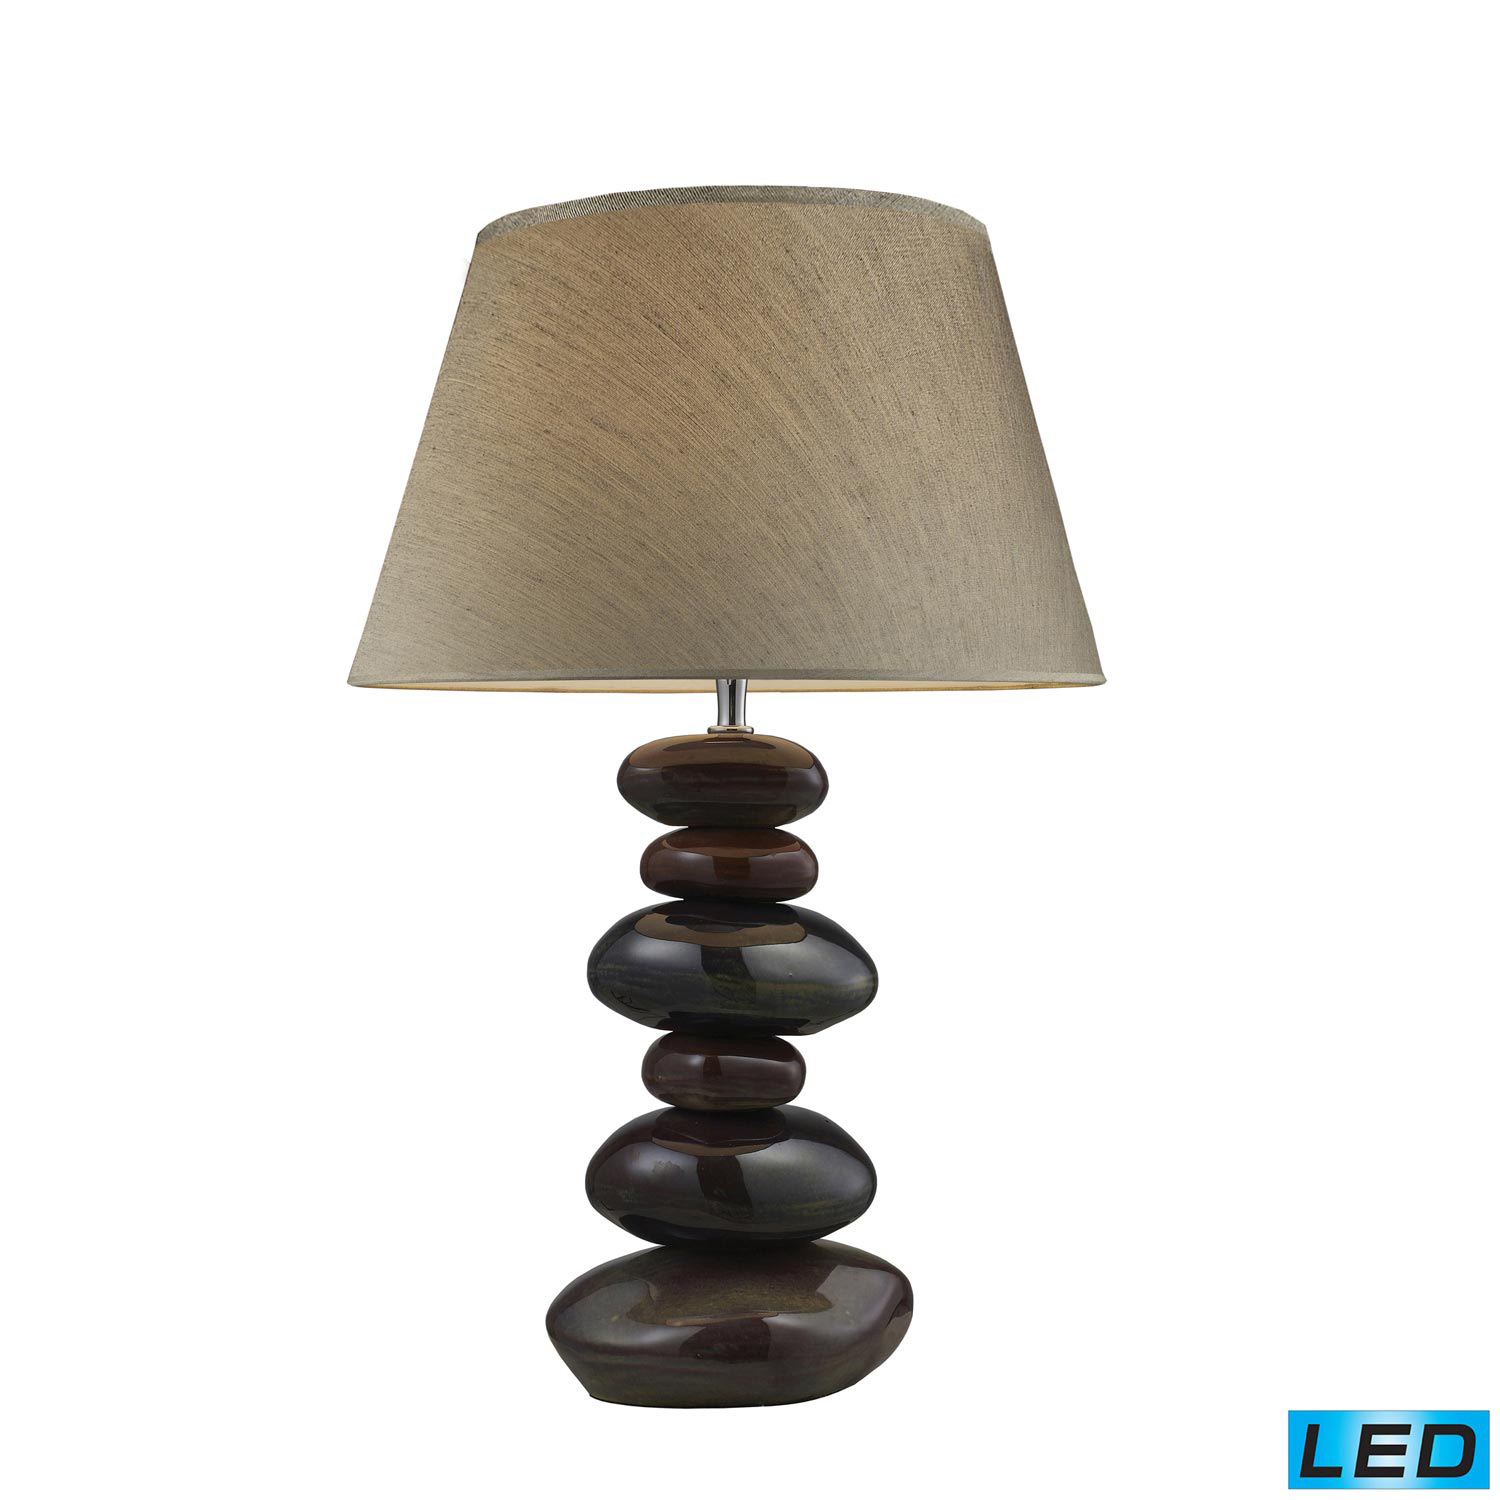 Elk Lighting 3950/1 -LED Elemis Table Lamp - Natural Stone